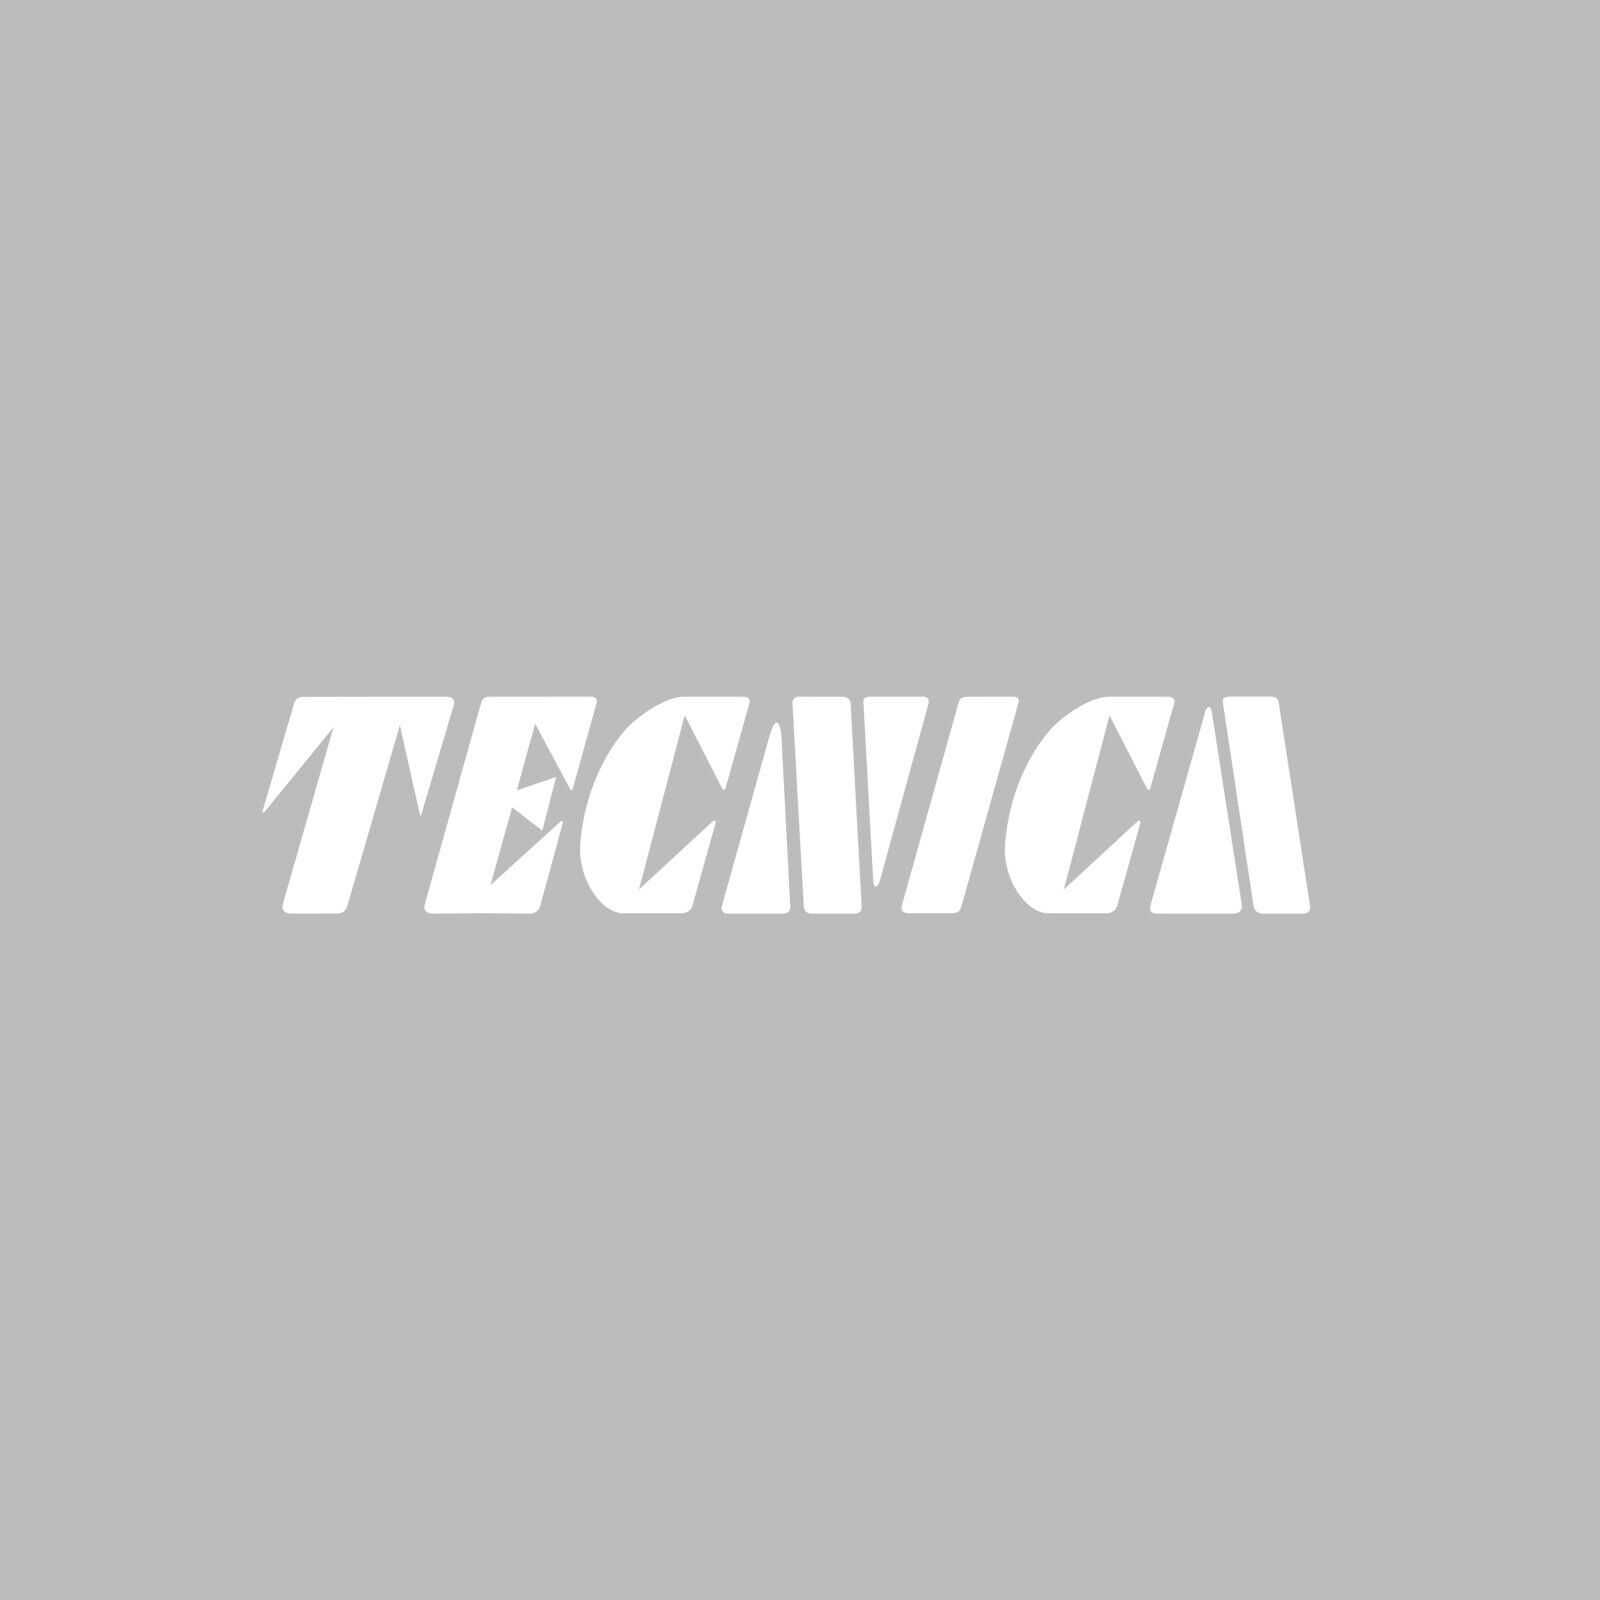 TECNICA SKI BOOTS Authentic Sticker / Decal 5” x 1” Vinyl Die-Cut (Mountain)